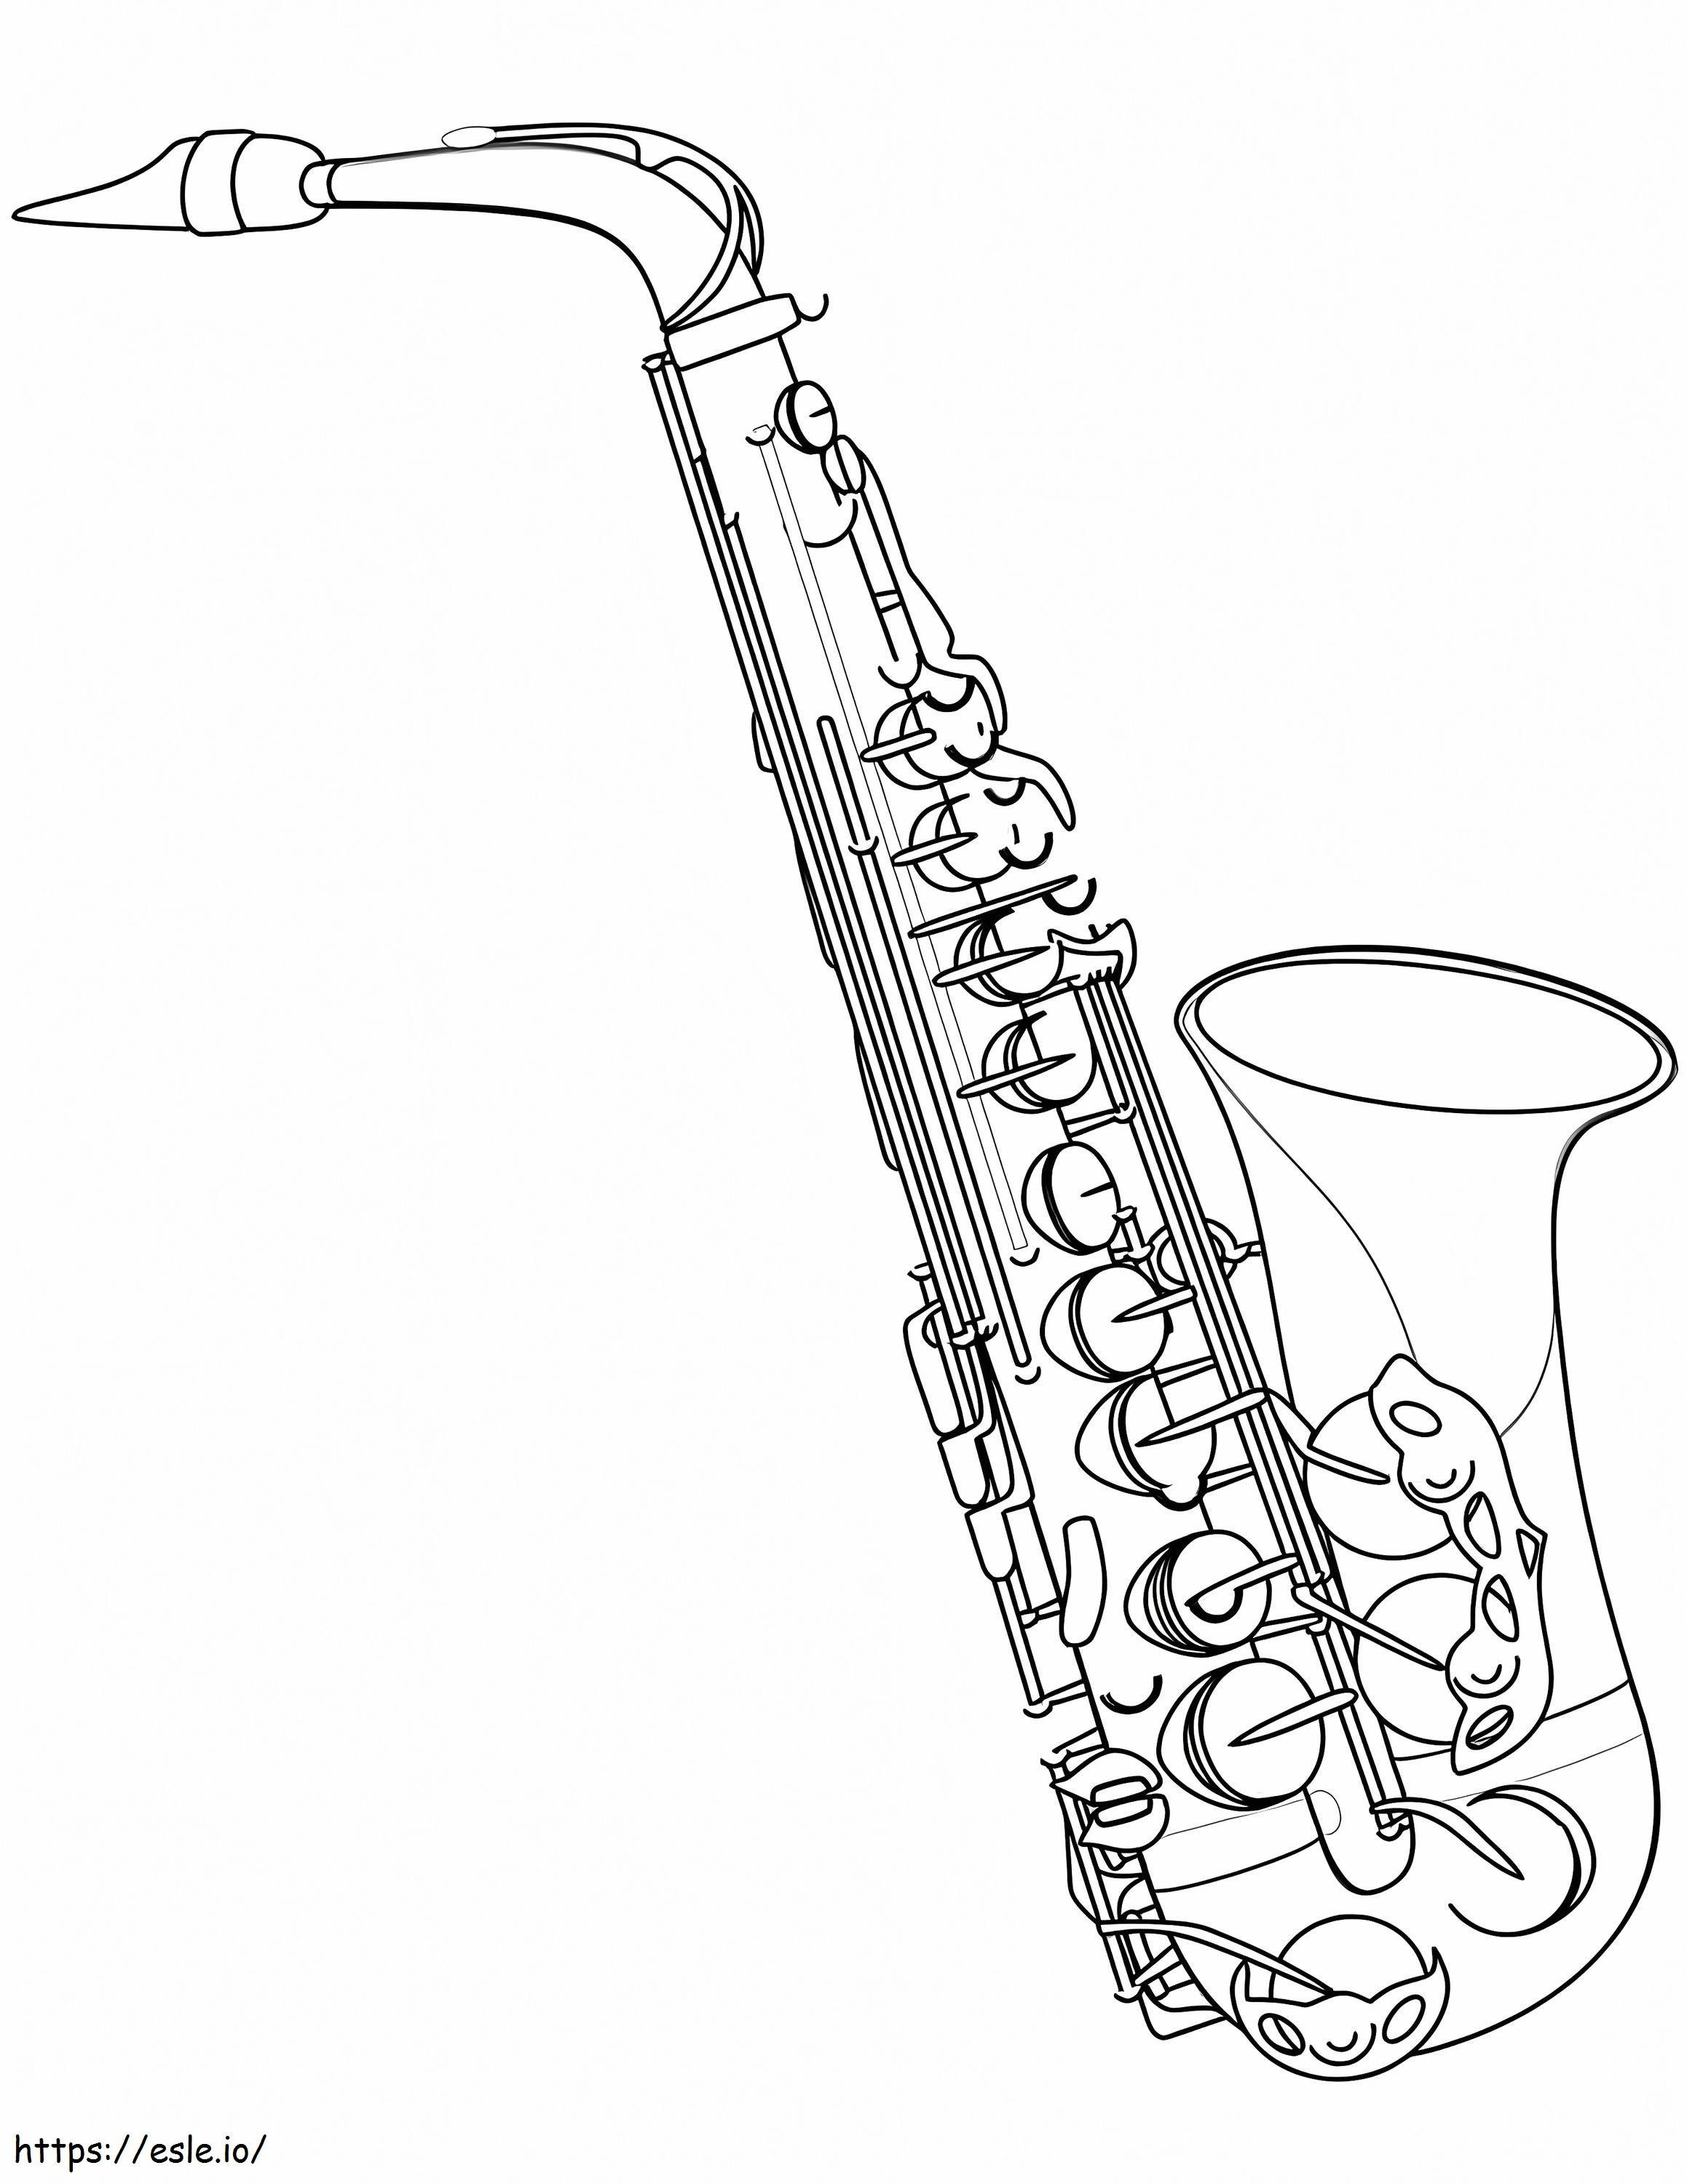 Prosty saksofon kolorowanka